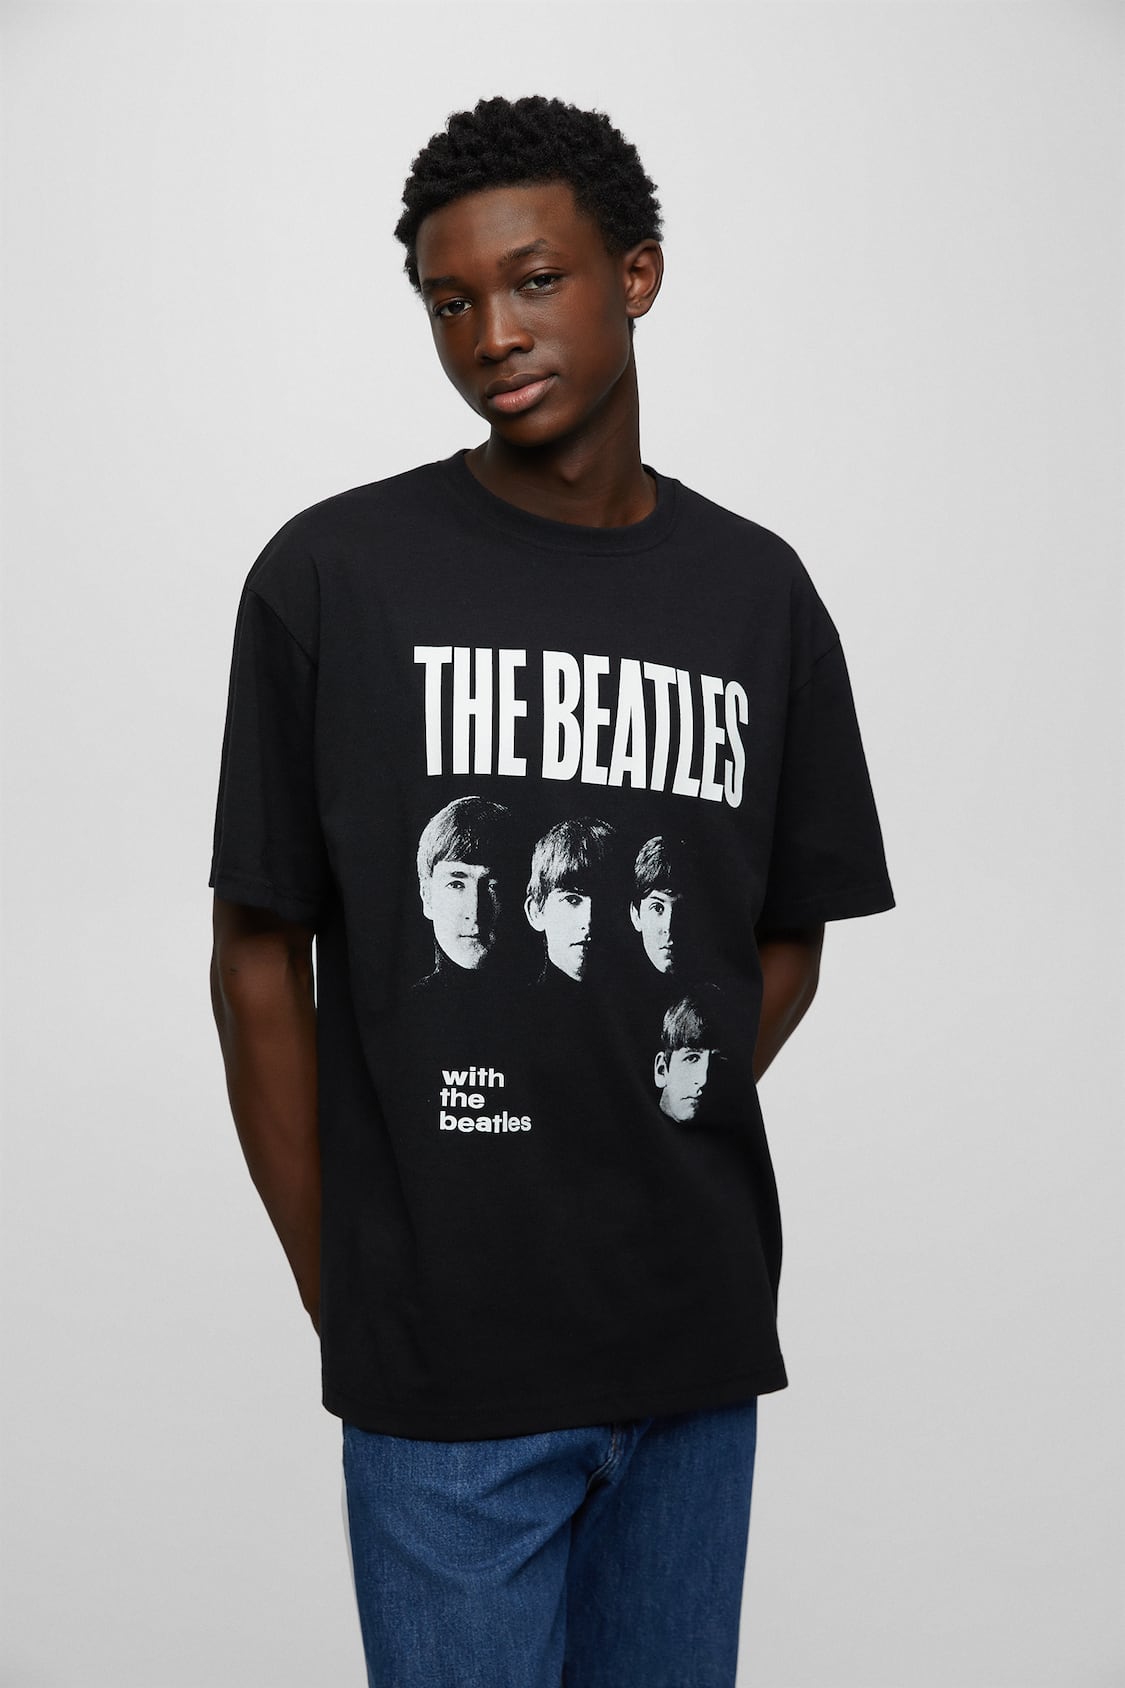 Método Sin aliento Torrente Camiseta The Beatles negra - PULL&BEAR